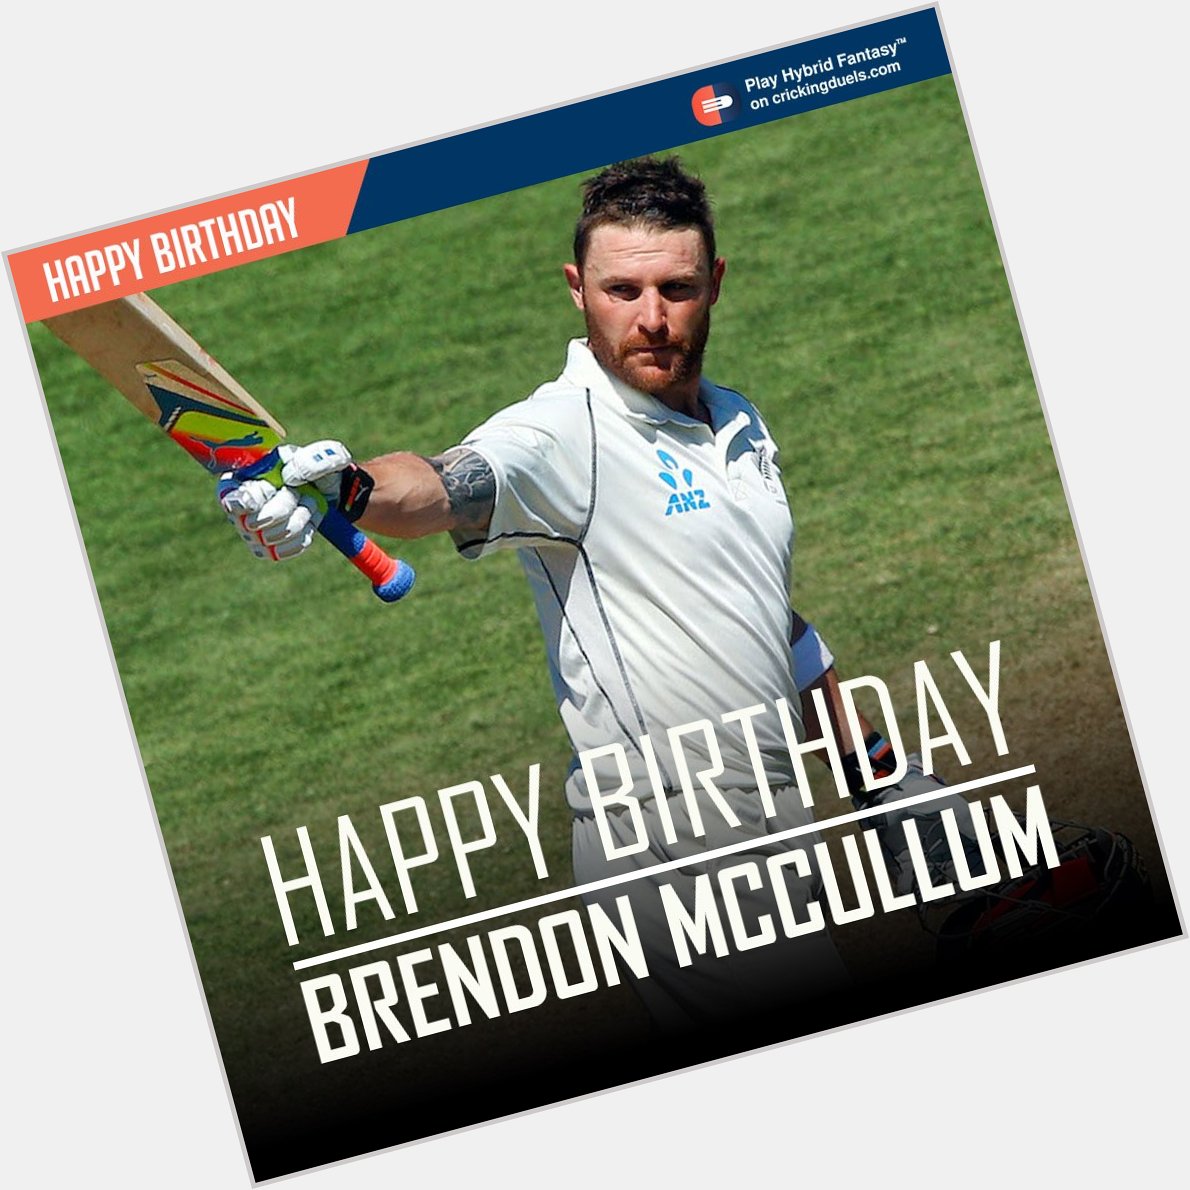 Happy Birthday,Brendon McCullum. The Kiwi cricketer turns 36 today. 